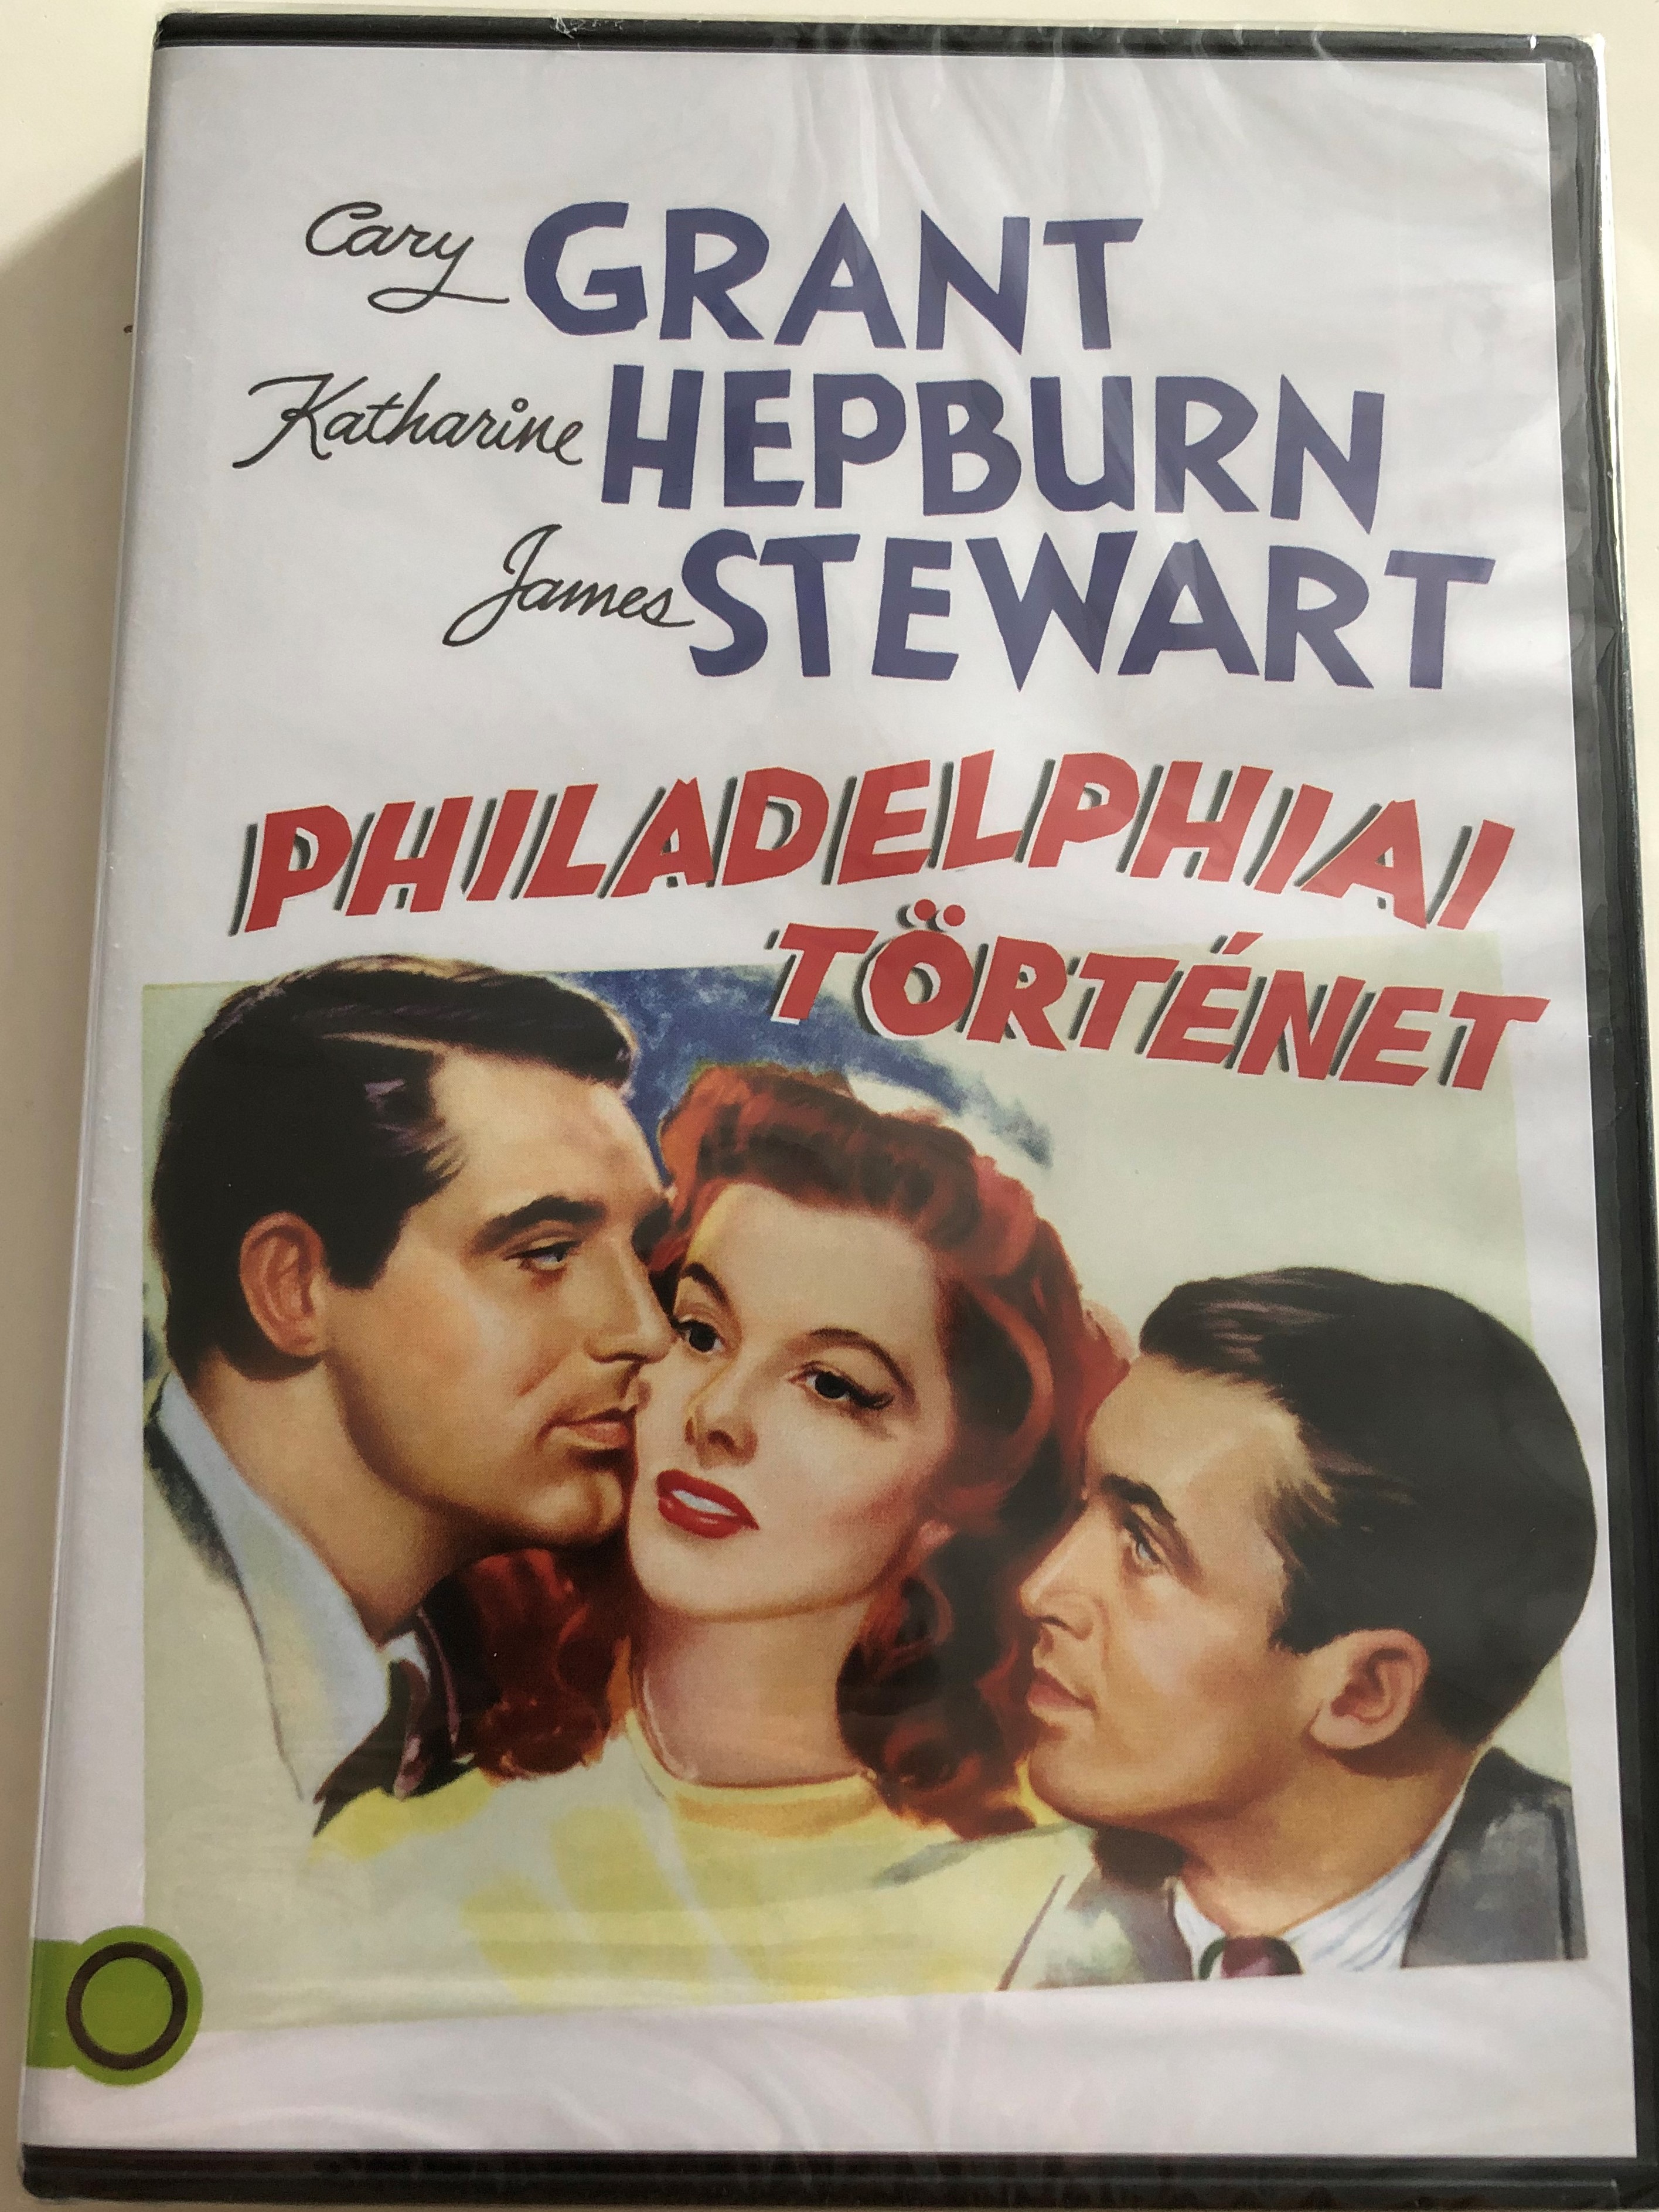 the-philadelphia-story-dvd-1940-philadelphiai-t-rt-net-directed-by-george-cukor-starring-cary-grant-katharine-hepburn-james-stewart-1-.jpg